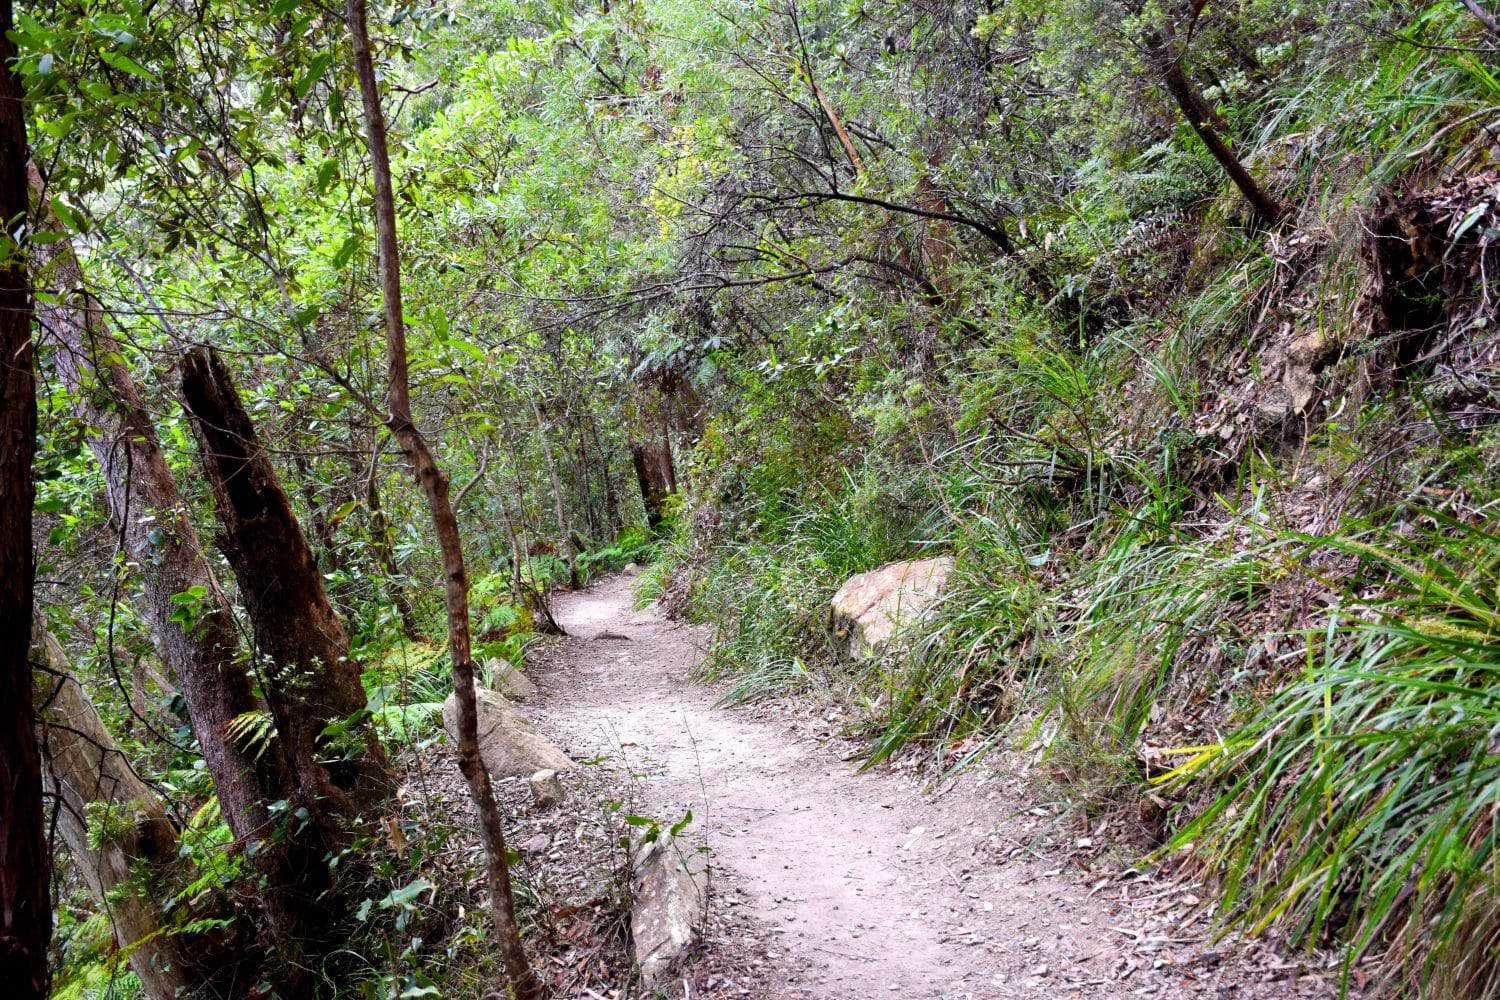 Sydney Bush Walks Bushwalking Tours And Outdoor Hiking Track Map